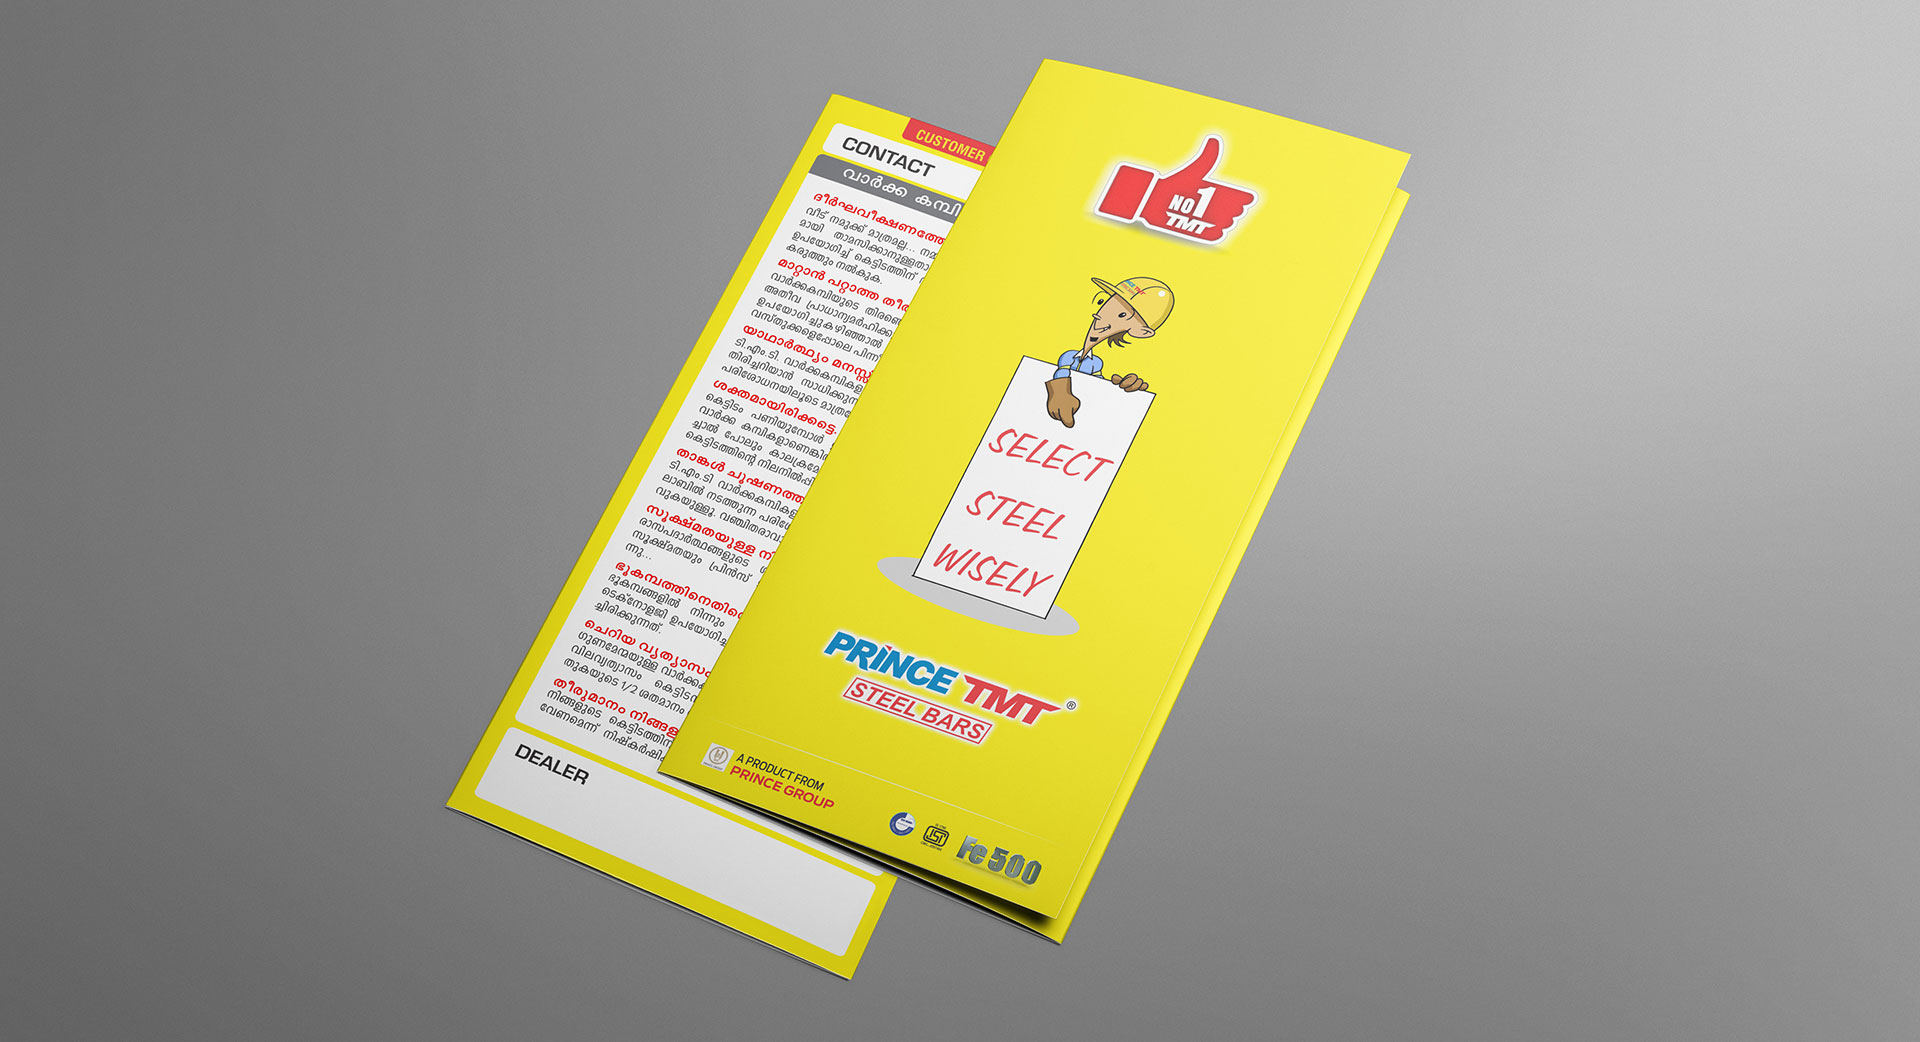 Prince TMT Steel Bars - No 1 TMT Branding design on Tri-Fold Brochure